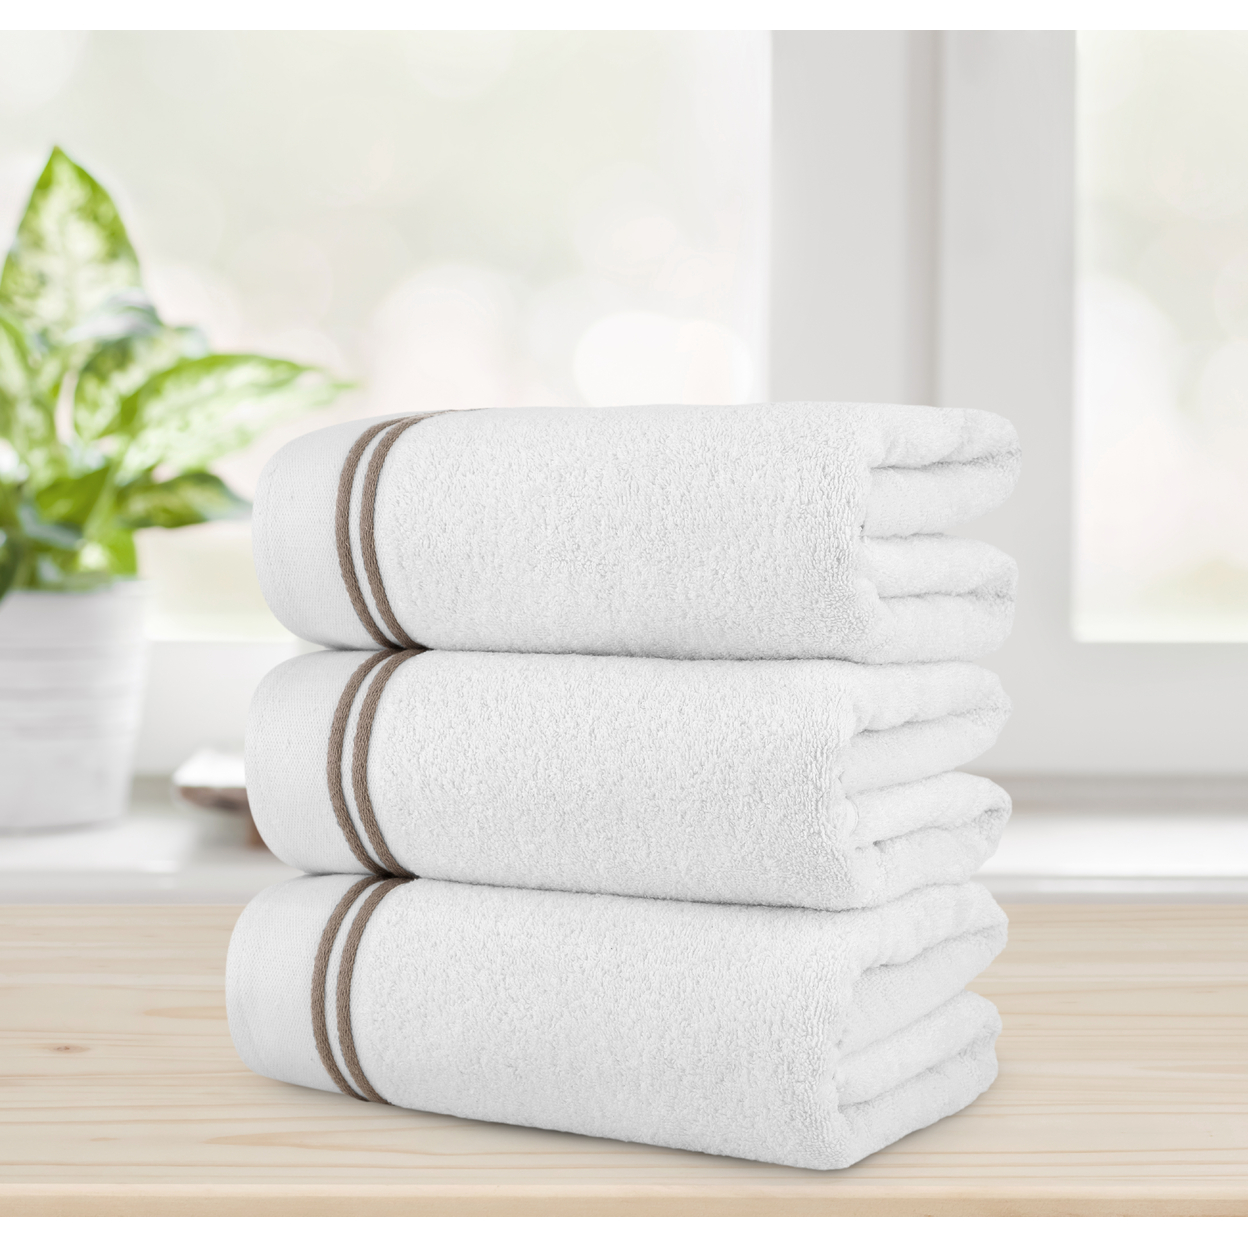 Chic Home Luxurious 3-Piece 100% Pure Turkish Cotton White Bath Towels, 30 X 60, Striped Hem, OEKO-TEX Certified Set - White-taupe